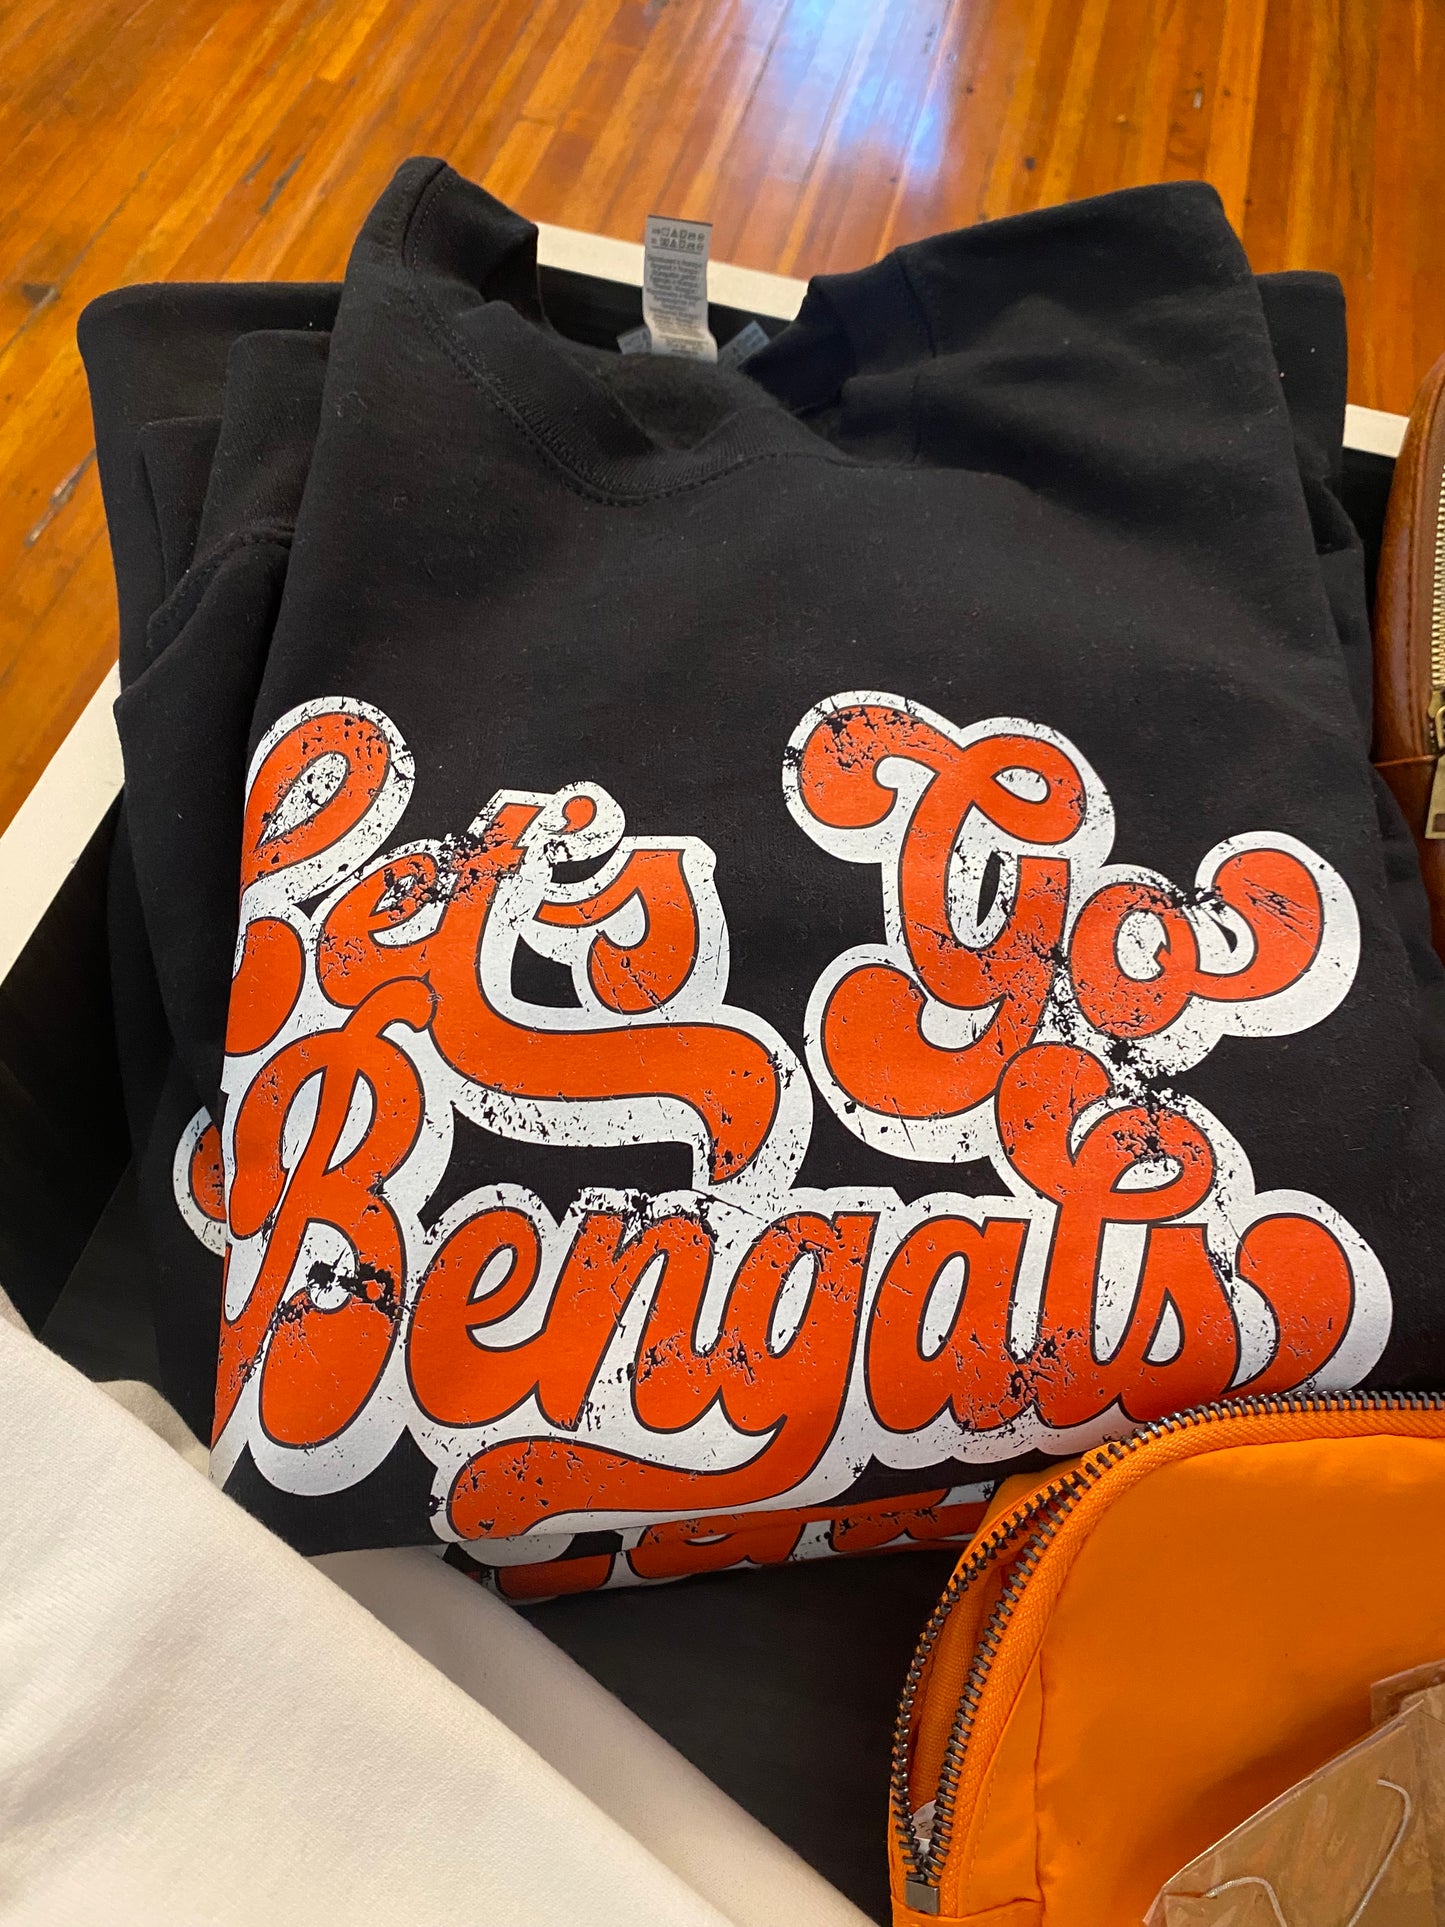 Let’s Go Bengals